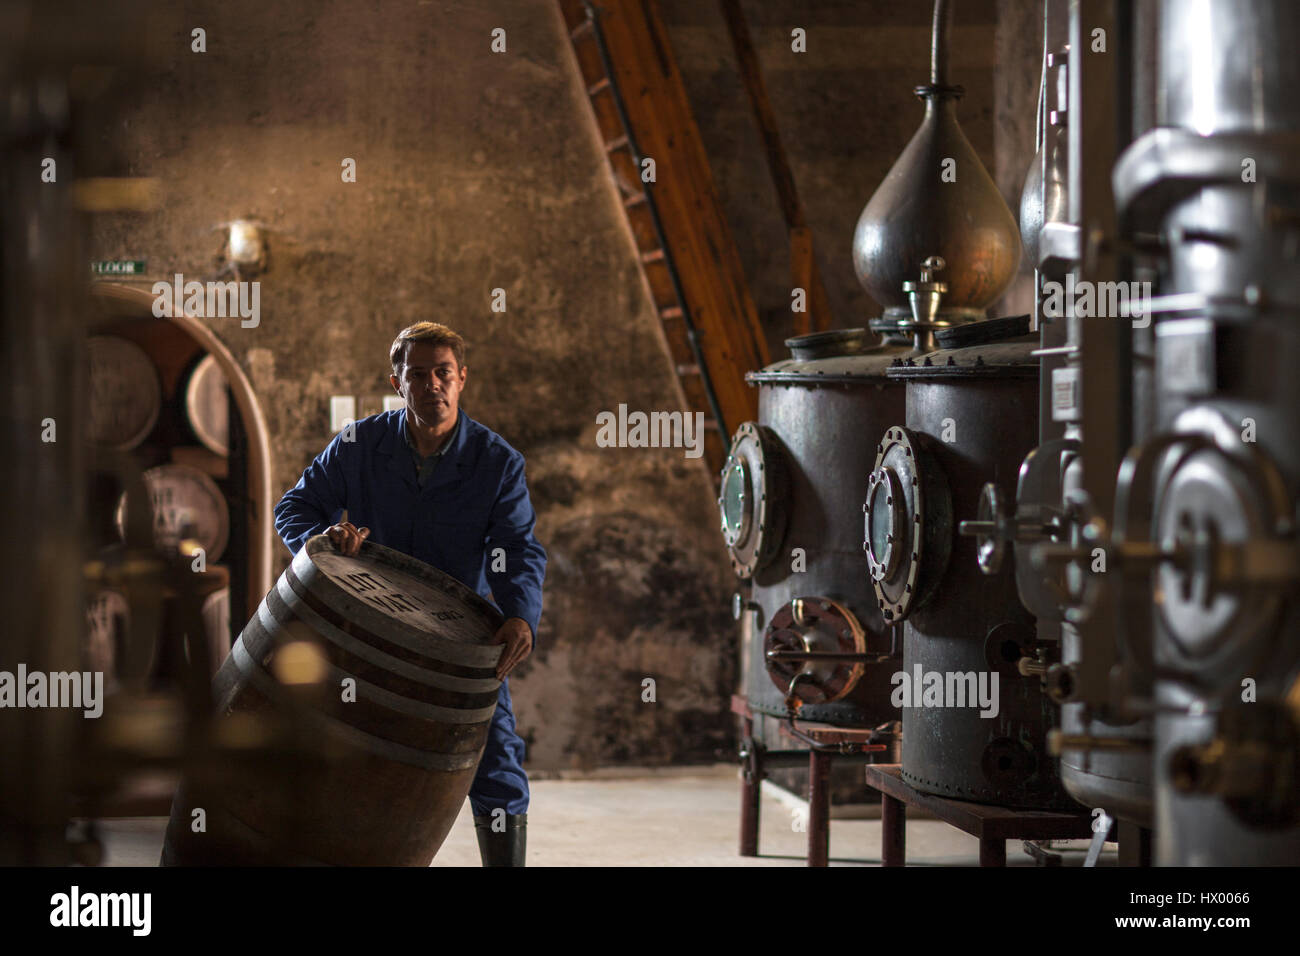 Worker working in distillery Stock Photo